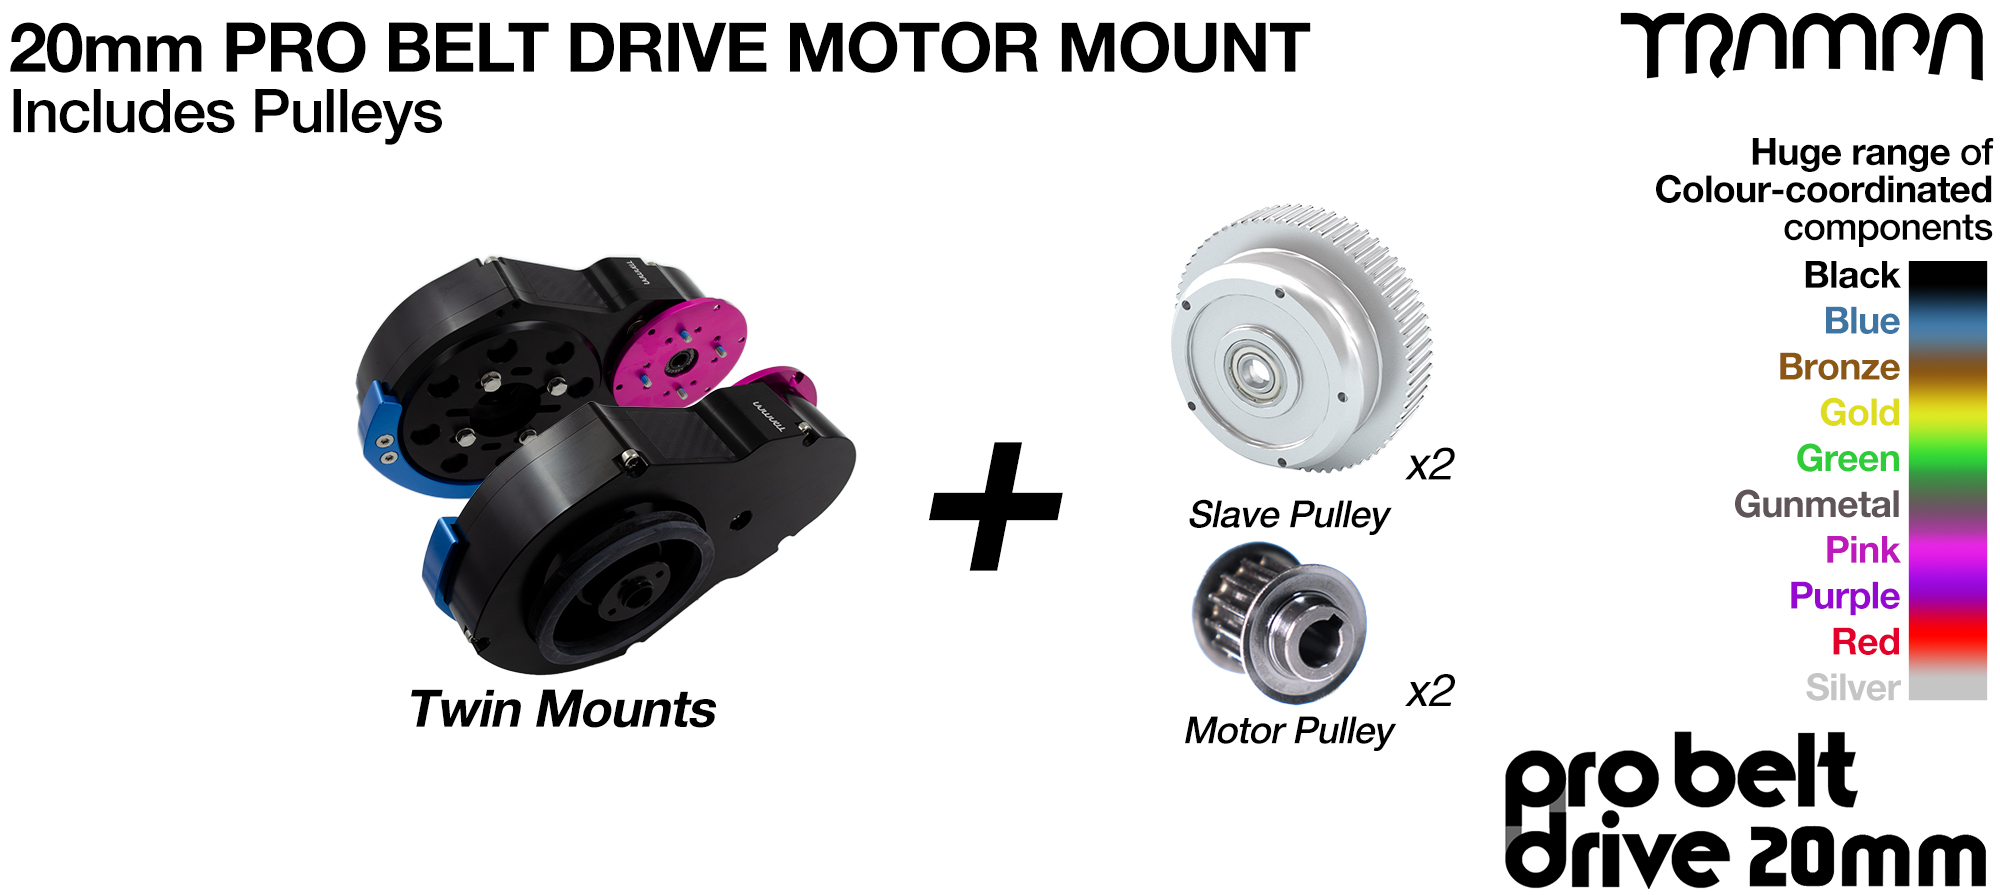 20mm PRO BELT DRIVE Motor Mounts with PULLEYs - NO Motors & NO Filters